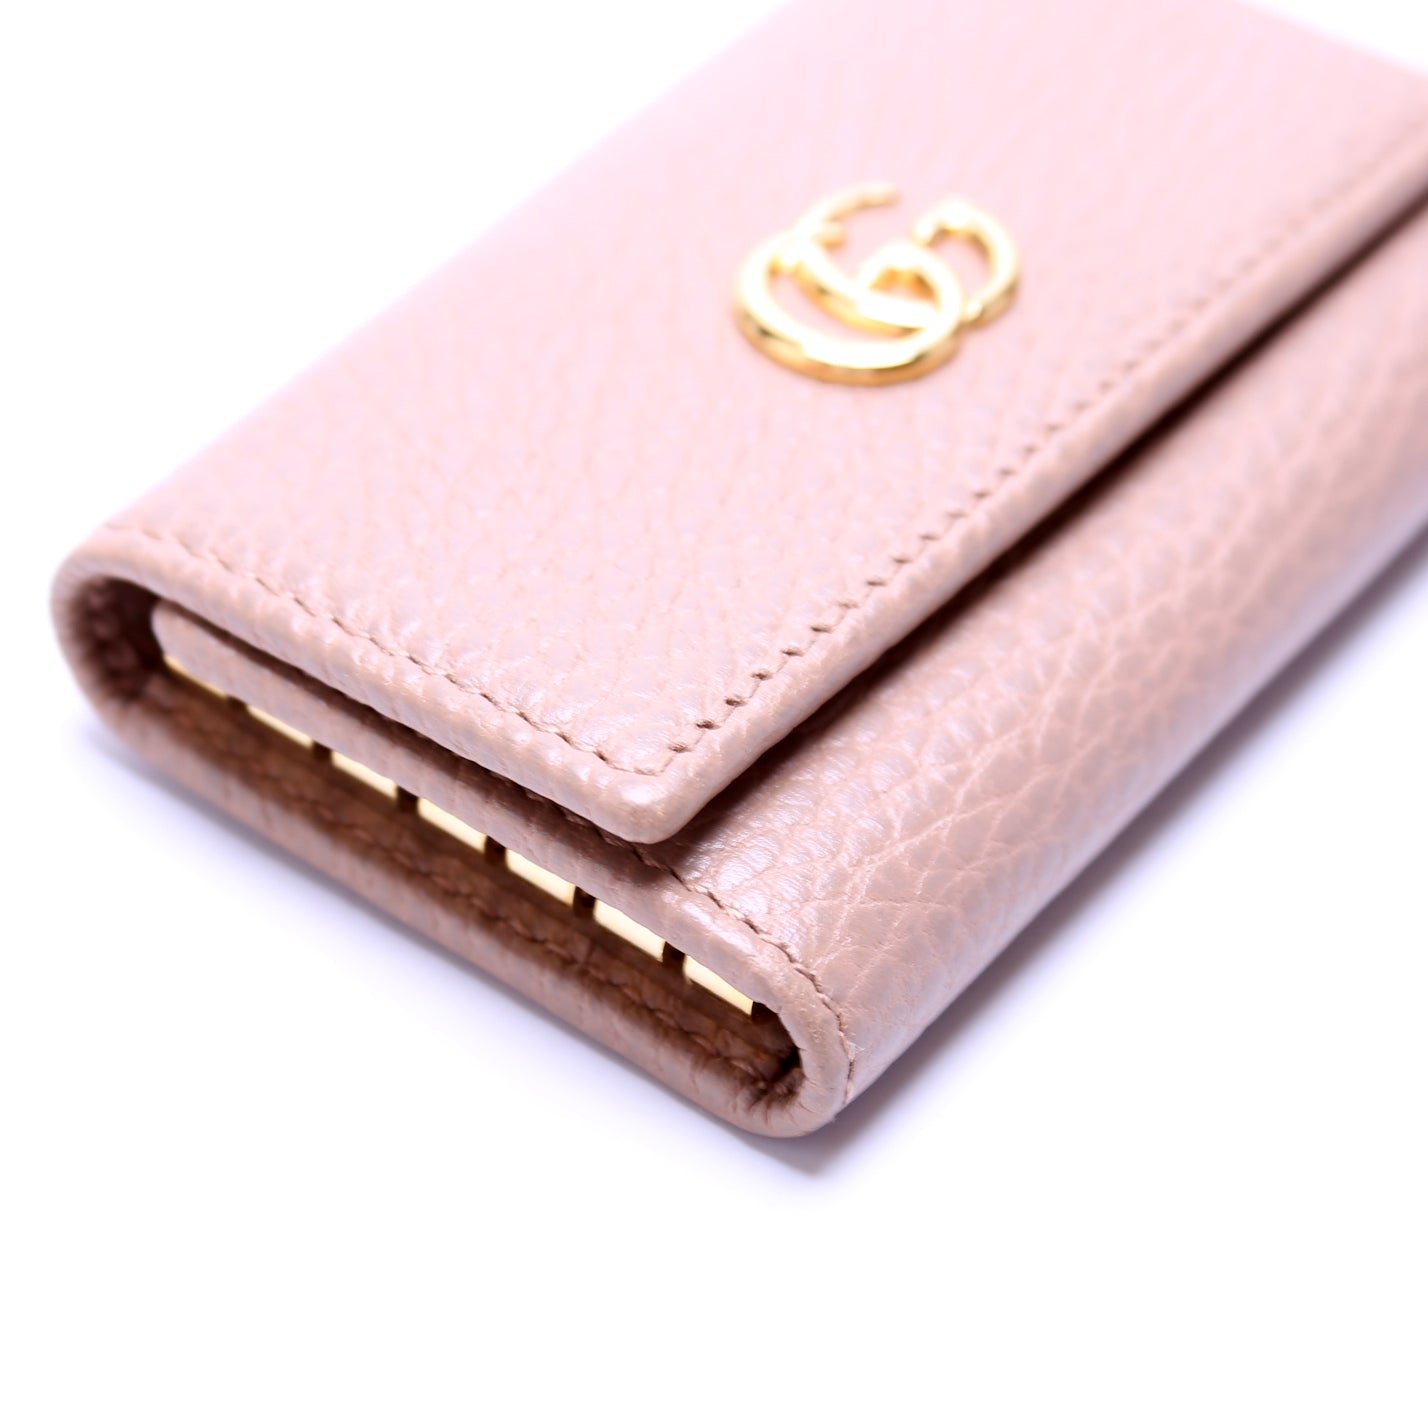 456118 Marmont GG Supreme Key Case – Keeks Designer Handbags